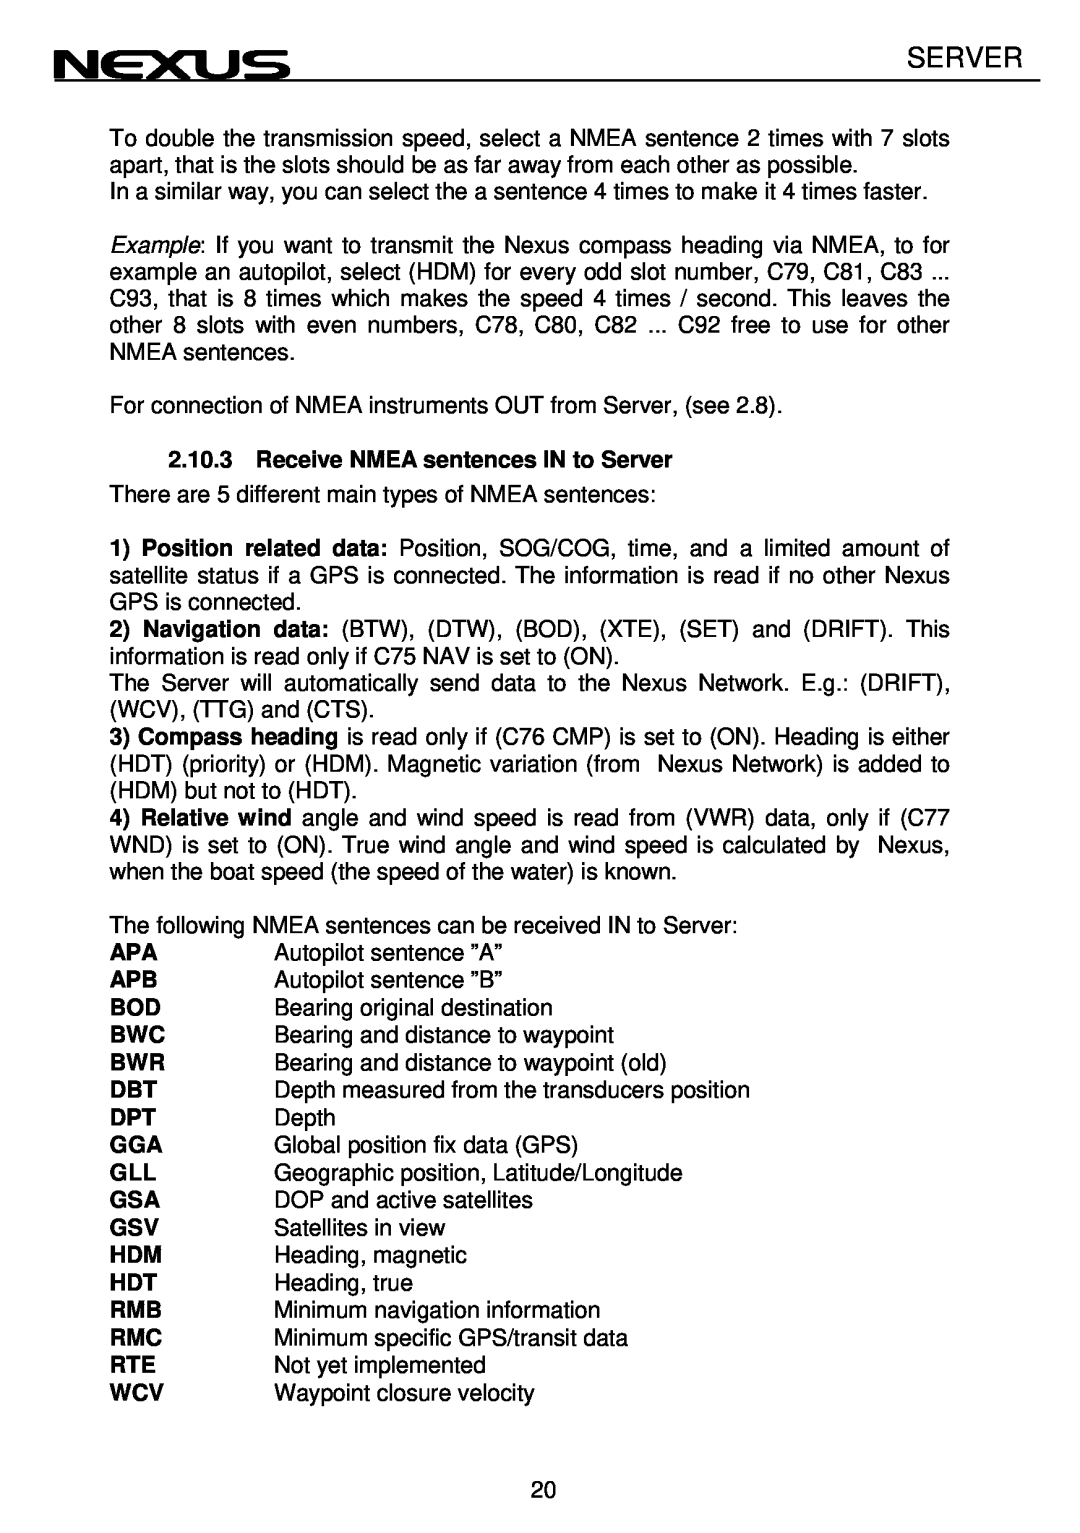 Nexus 21 NX2 operation manual Server, Autopilot sentence ”A” 